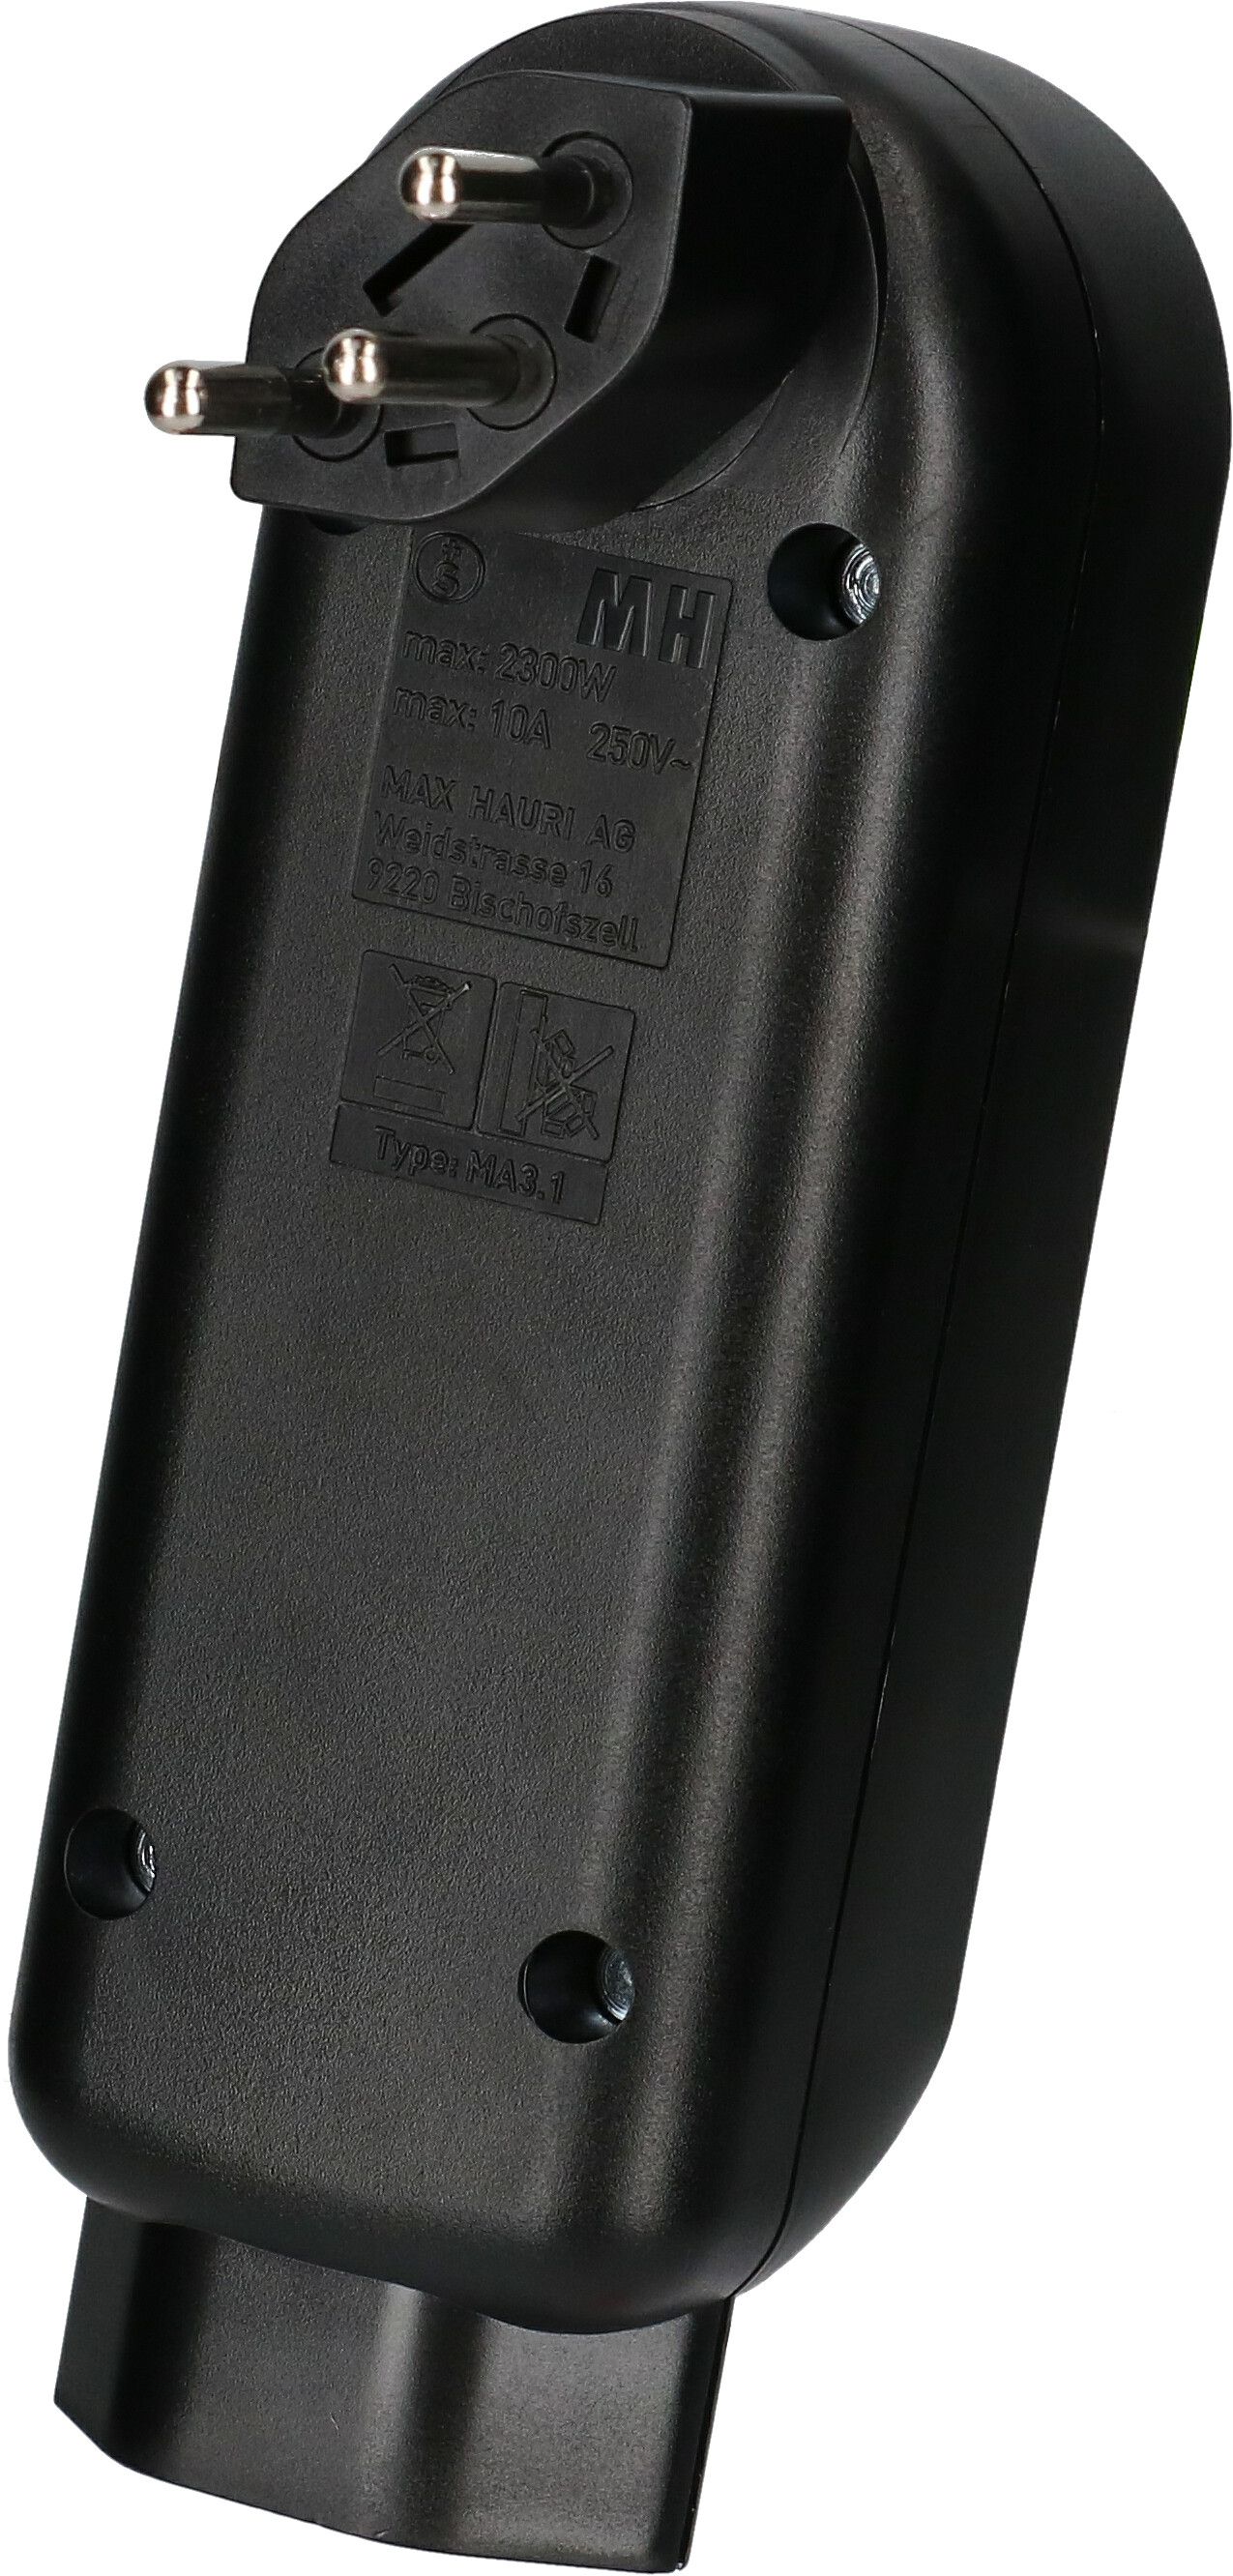 Adaptor 4x type 13 turnable black